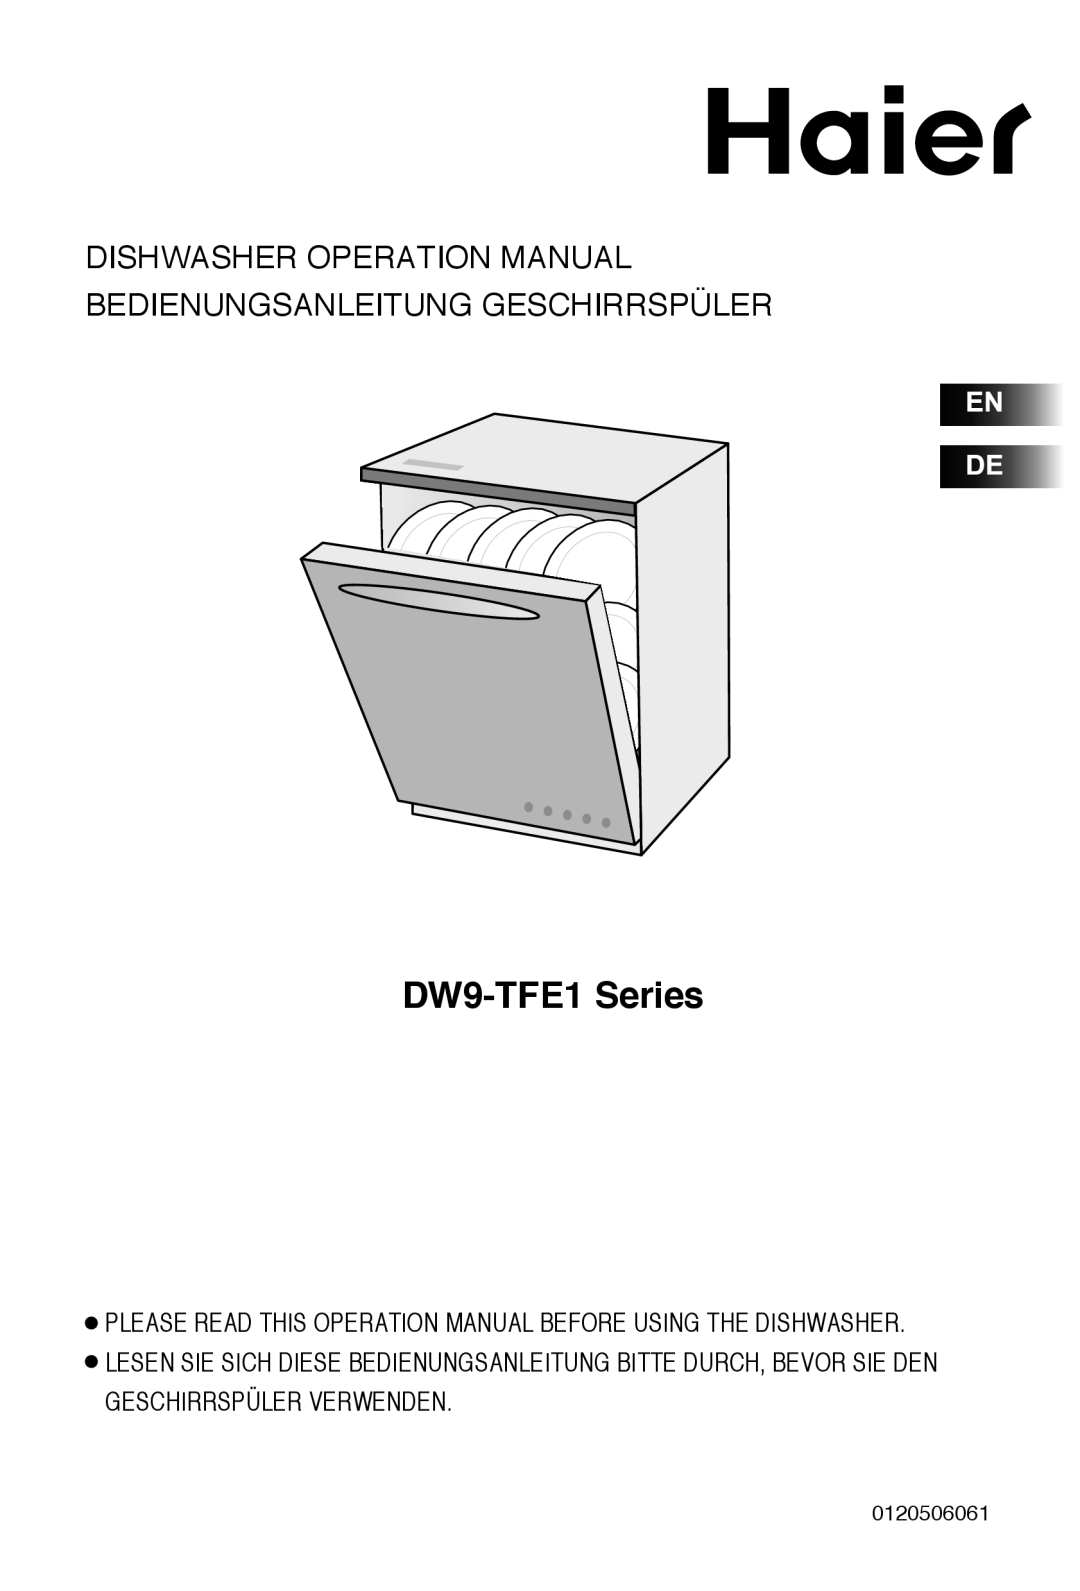 Haier operation manual DW9-TFE1 Series, Dishwasher Operation Manual Bedienungsanleitung Geschirrspüler 